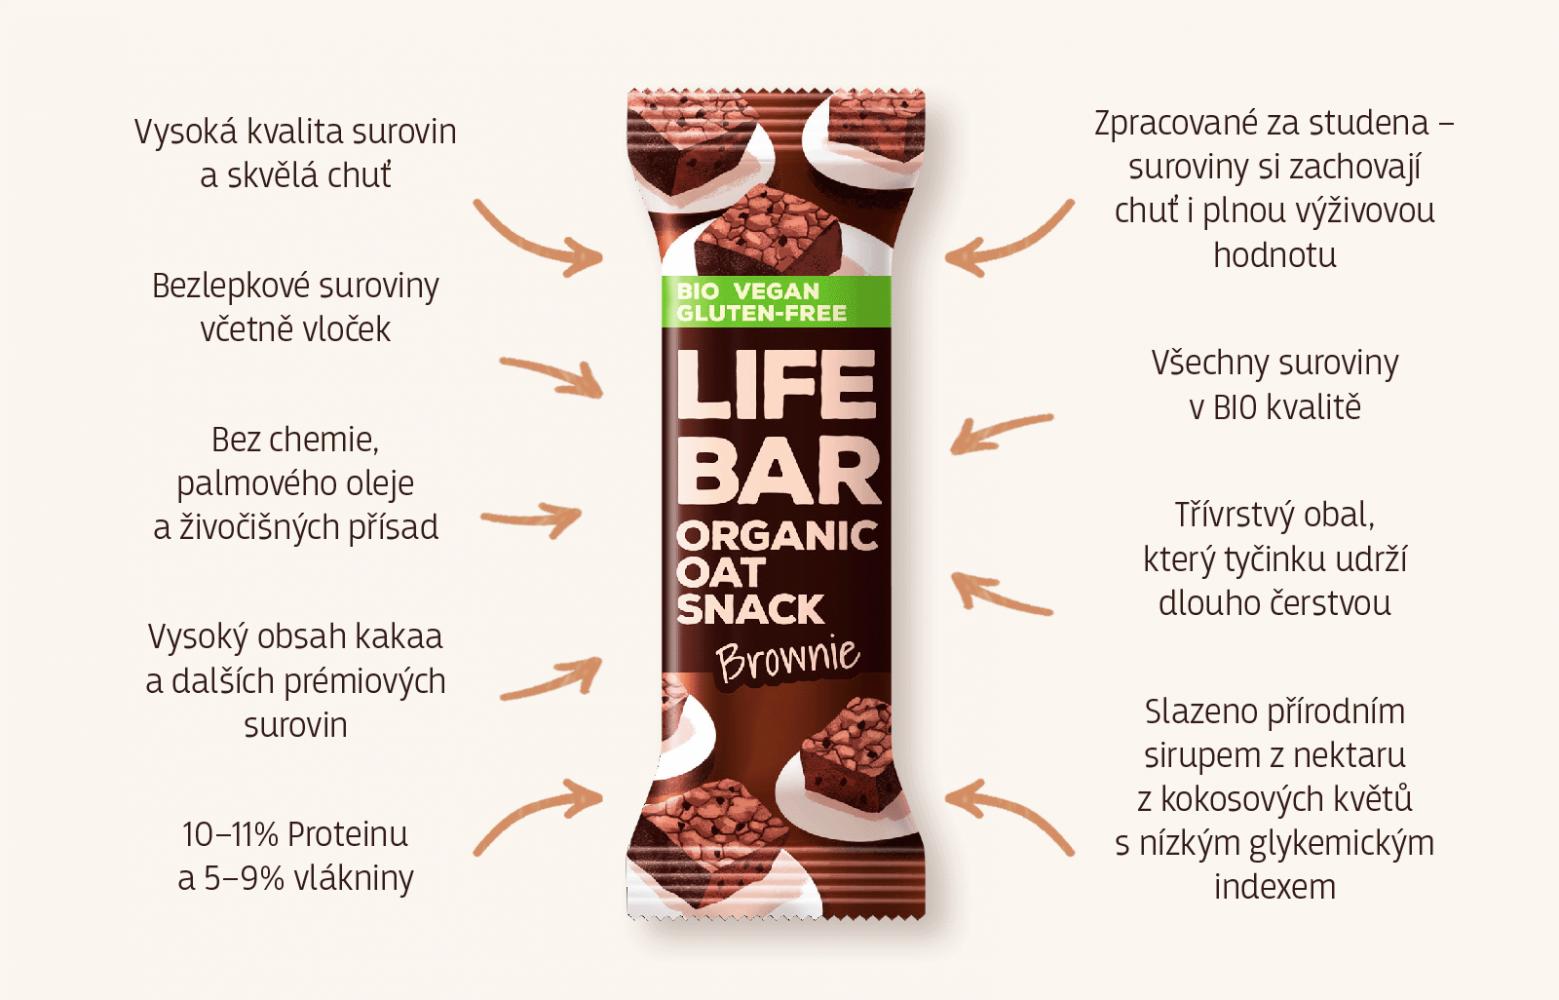 Lifebar-Out-Snack-Benefity-CZ-Brownie-barevne-1000-1000